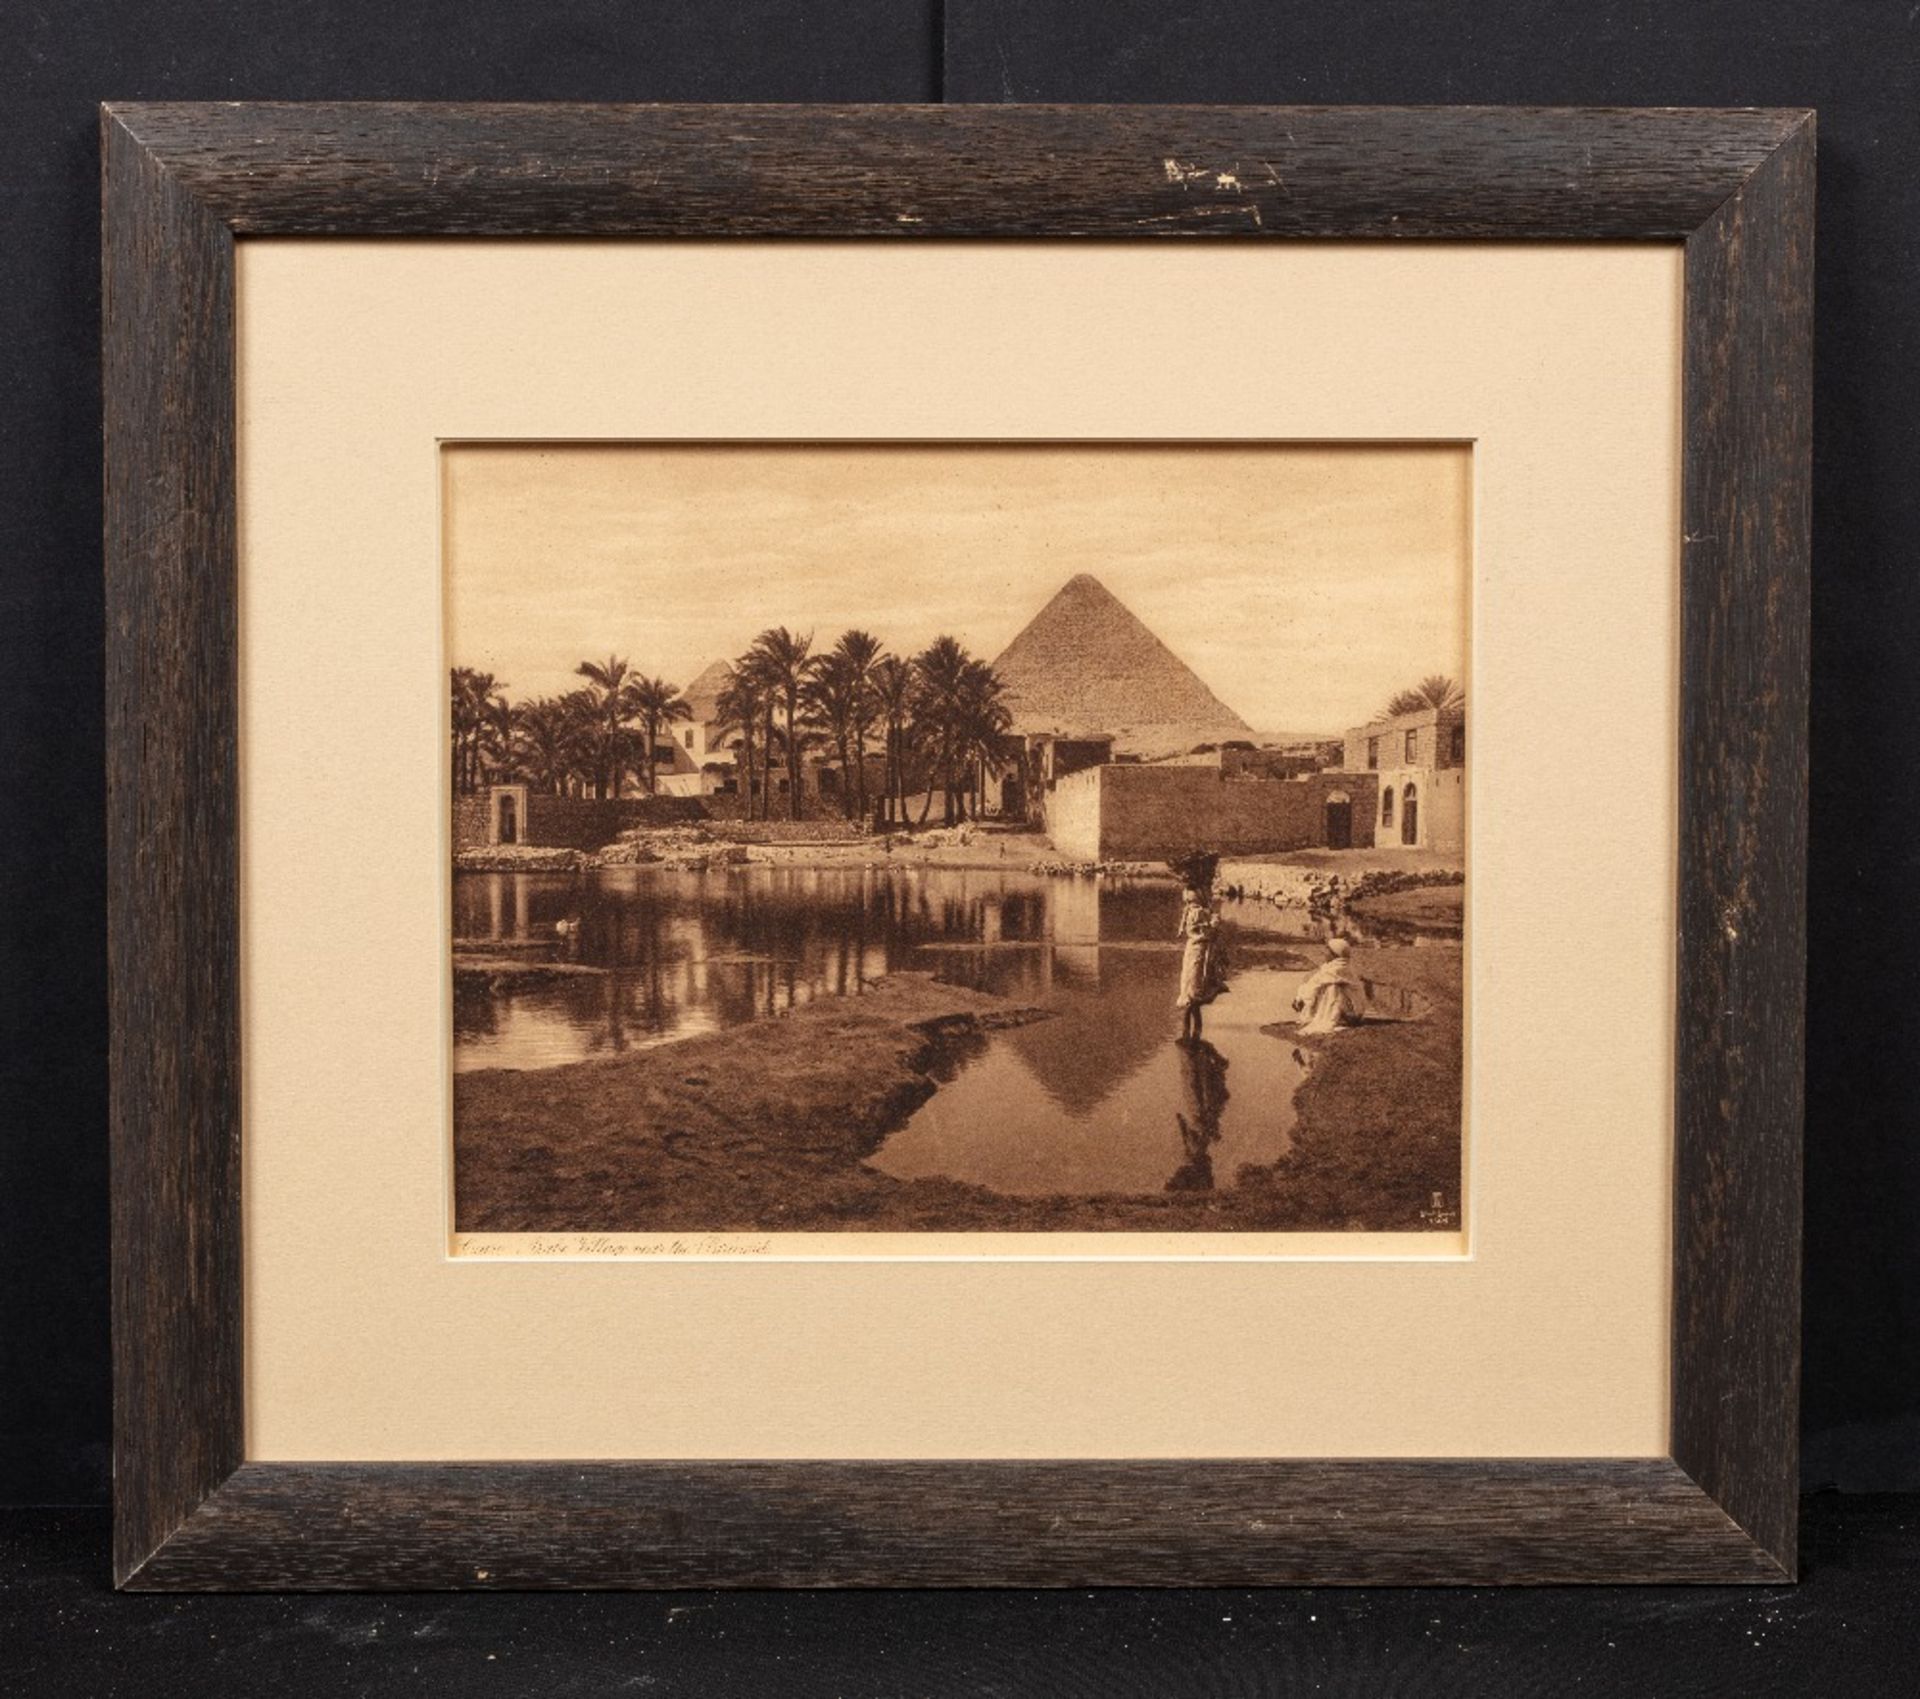 Lehnert, R. (1878-1948) & Landrock, E. (1878-1966).Trois vues d'EgypteCairo, Arab village near the - Image 2 of 4